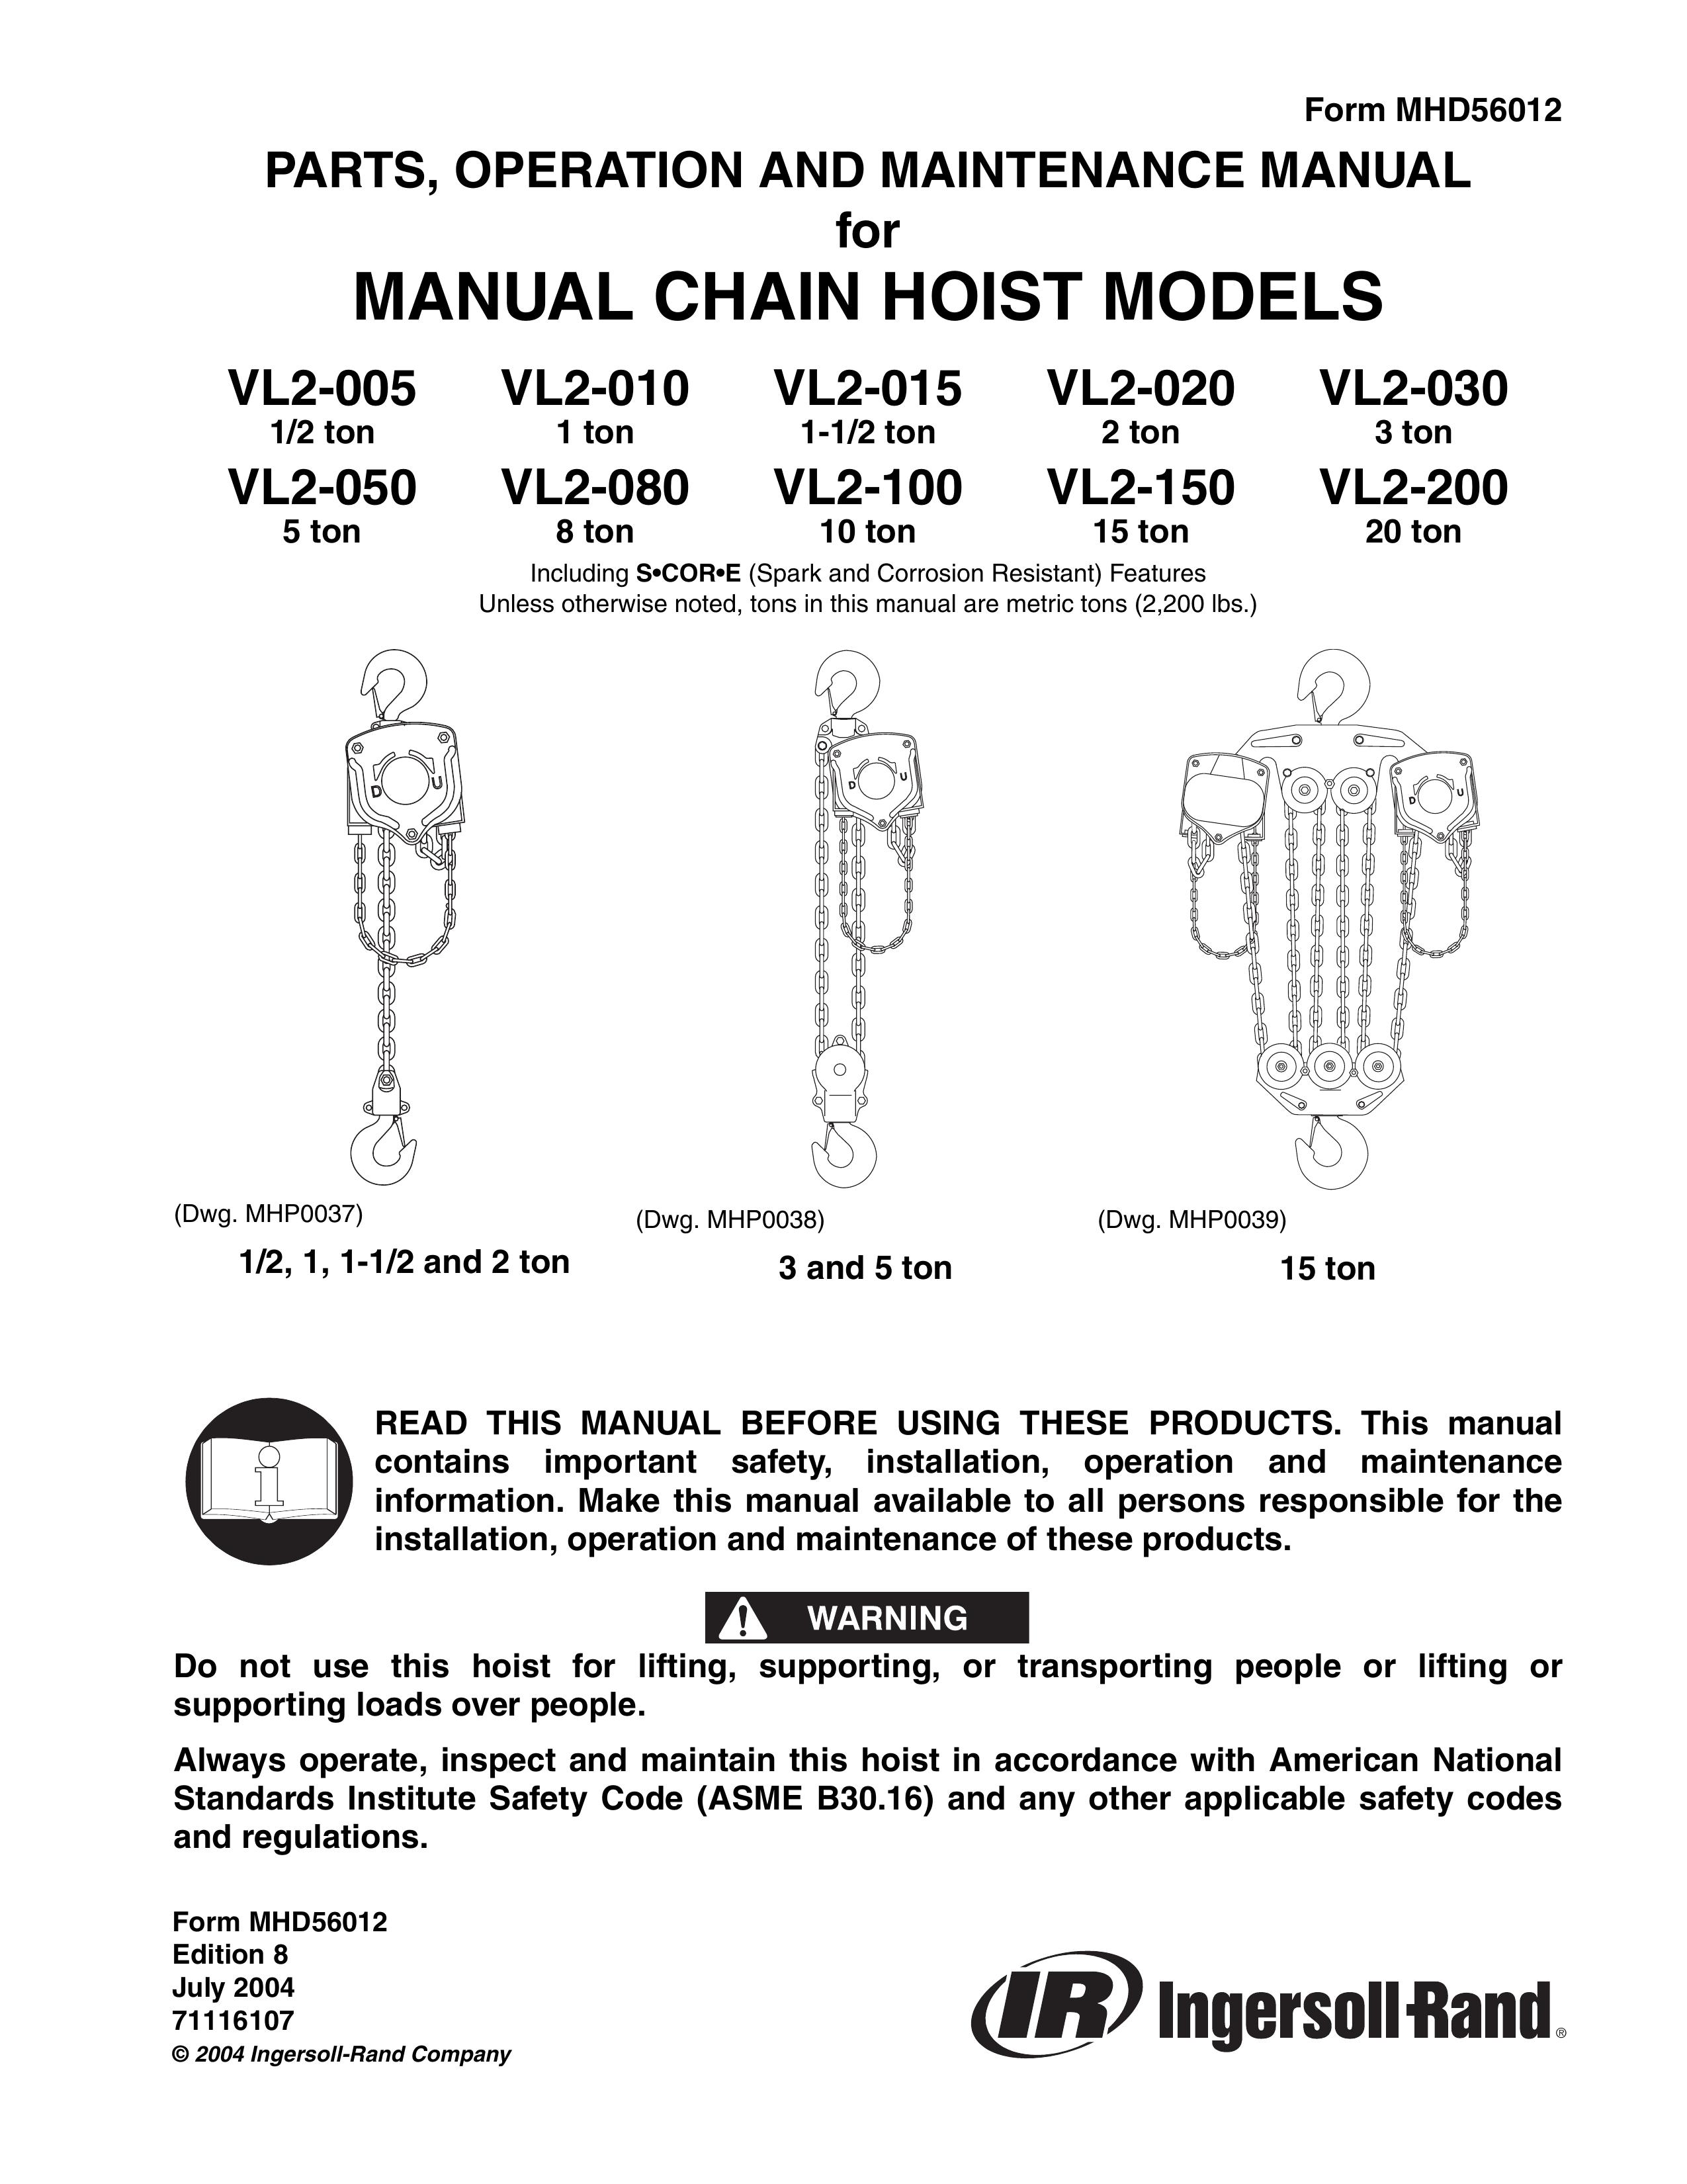 Ingersoll-Rand VL2-020 Digital Photo Keychain User Manual